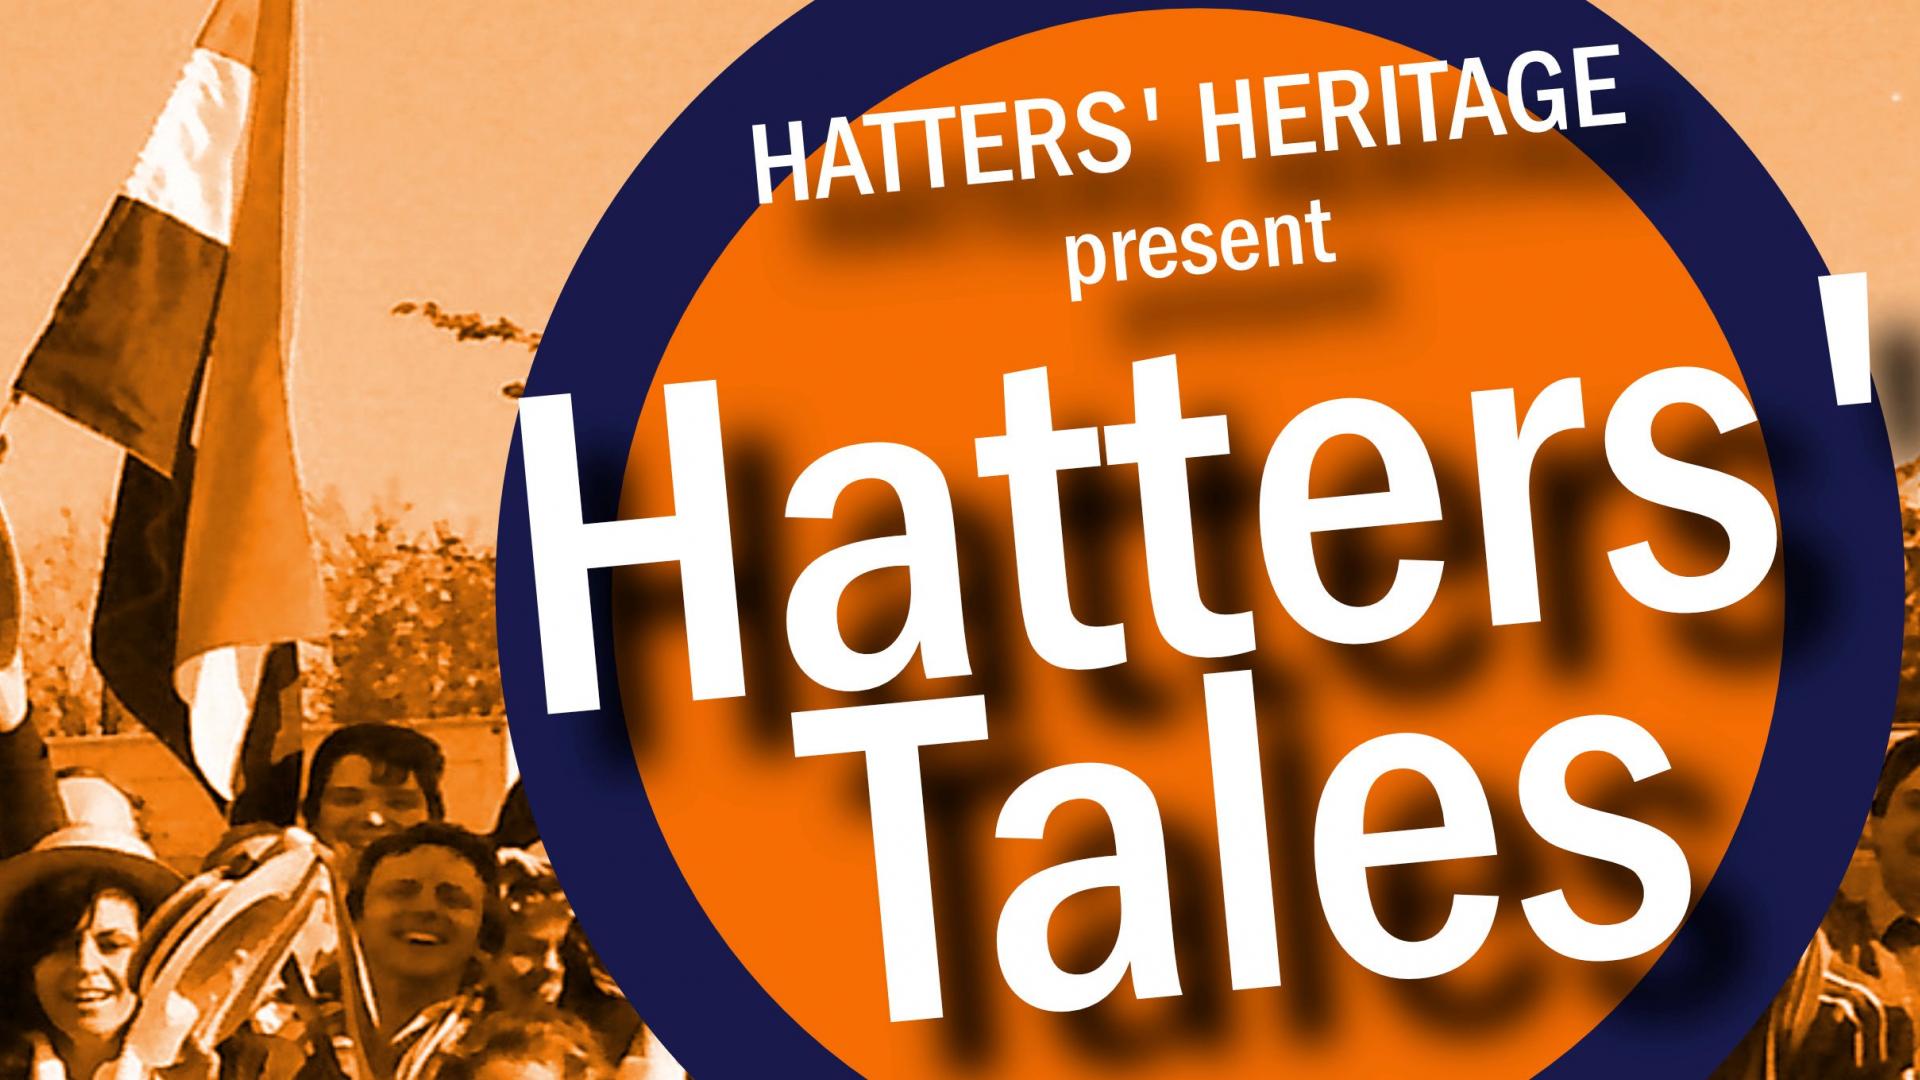 Hatters' tales edit1